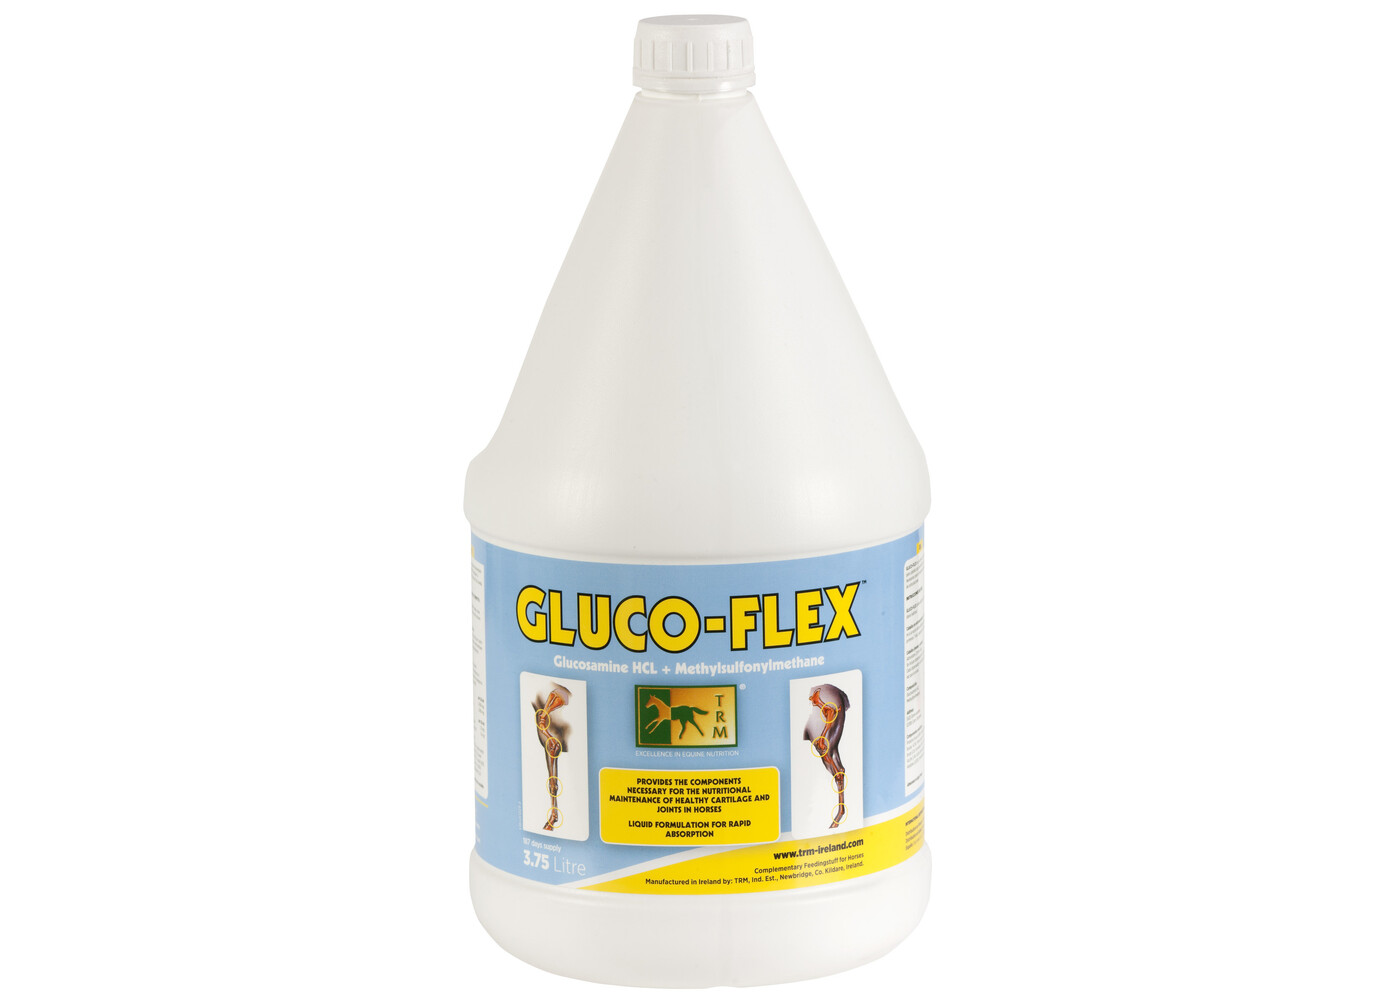 TRM Gluco - flex 3.75 ltr